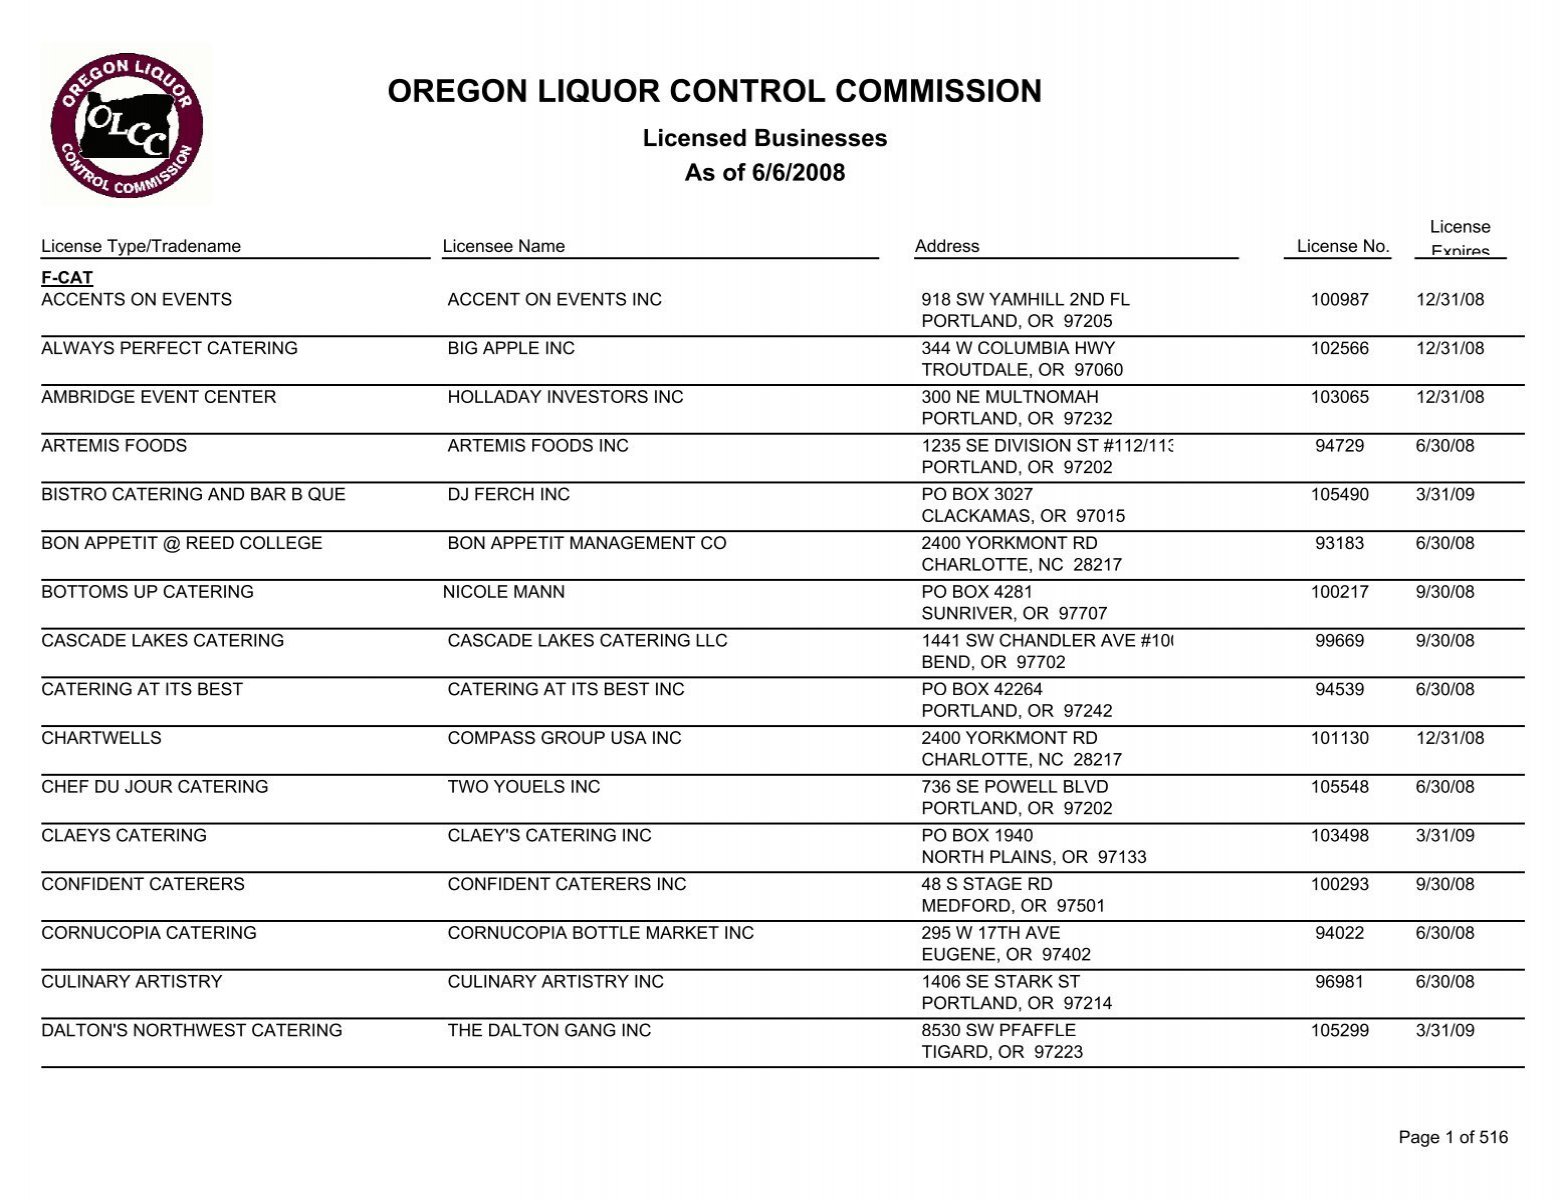 Licensed Businesses As Of Oregon Liquor Control Commission